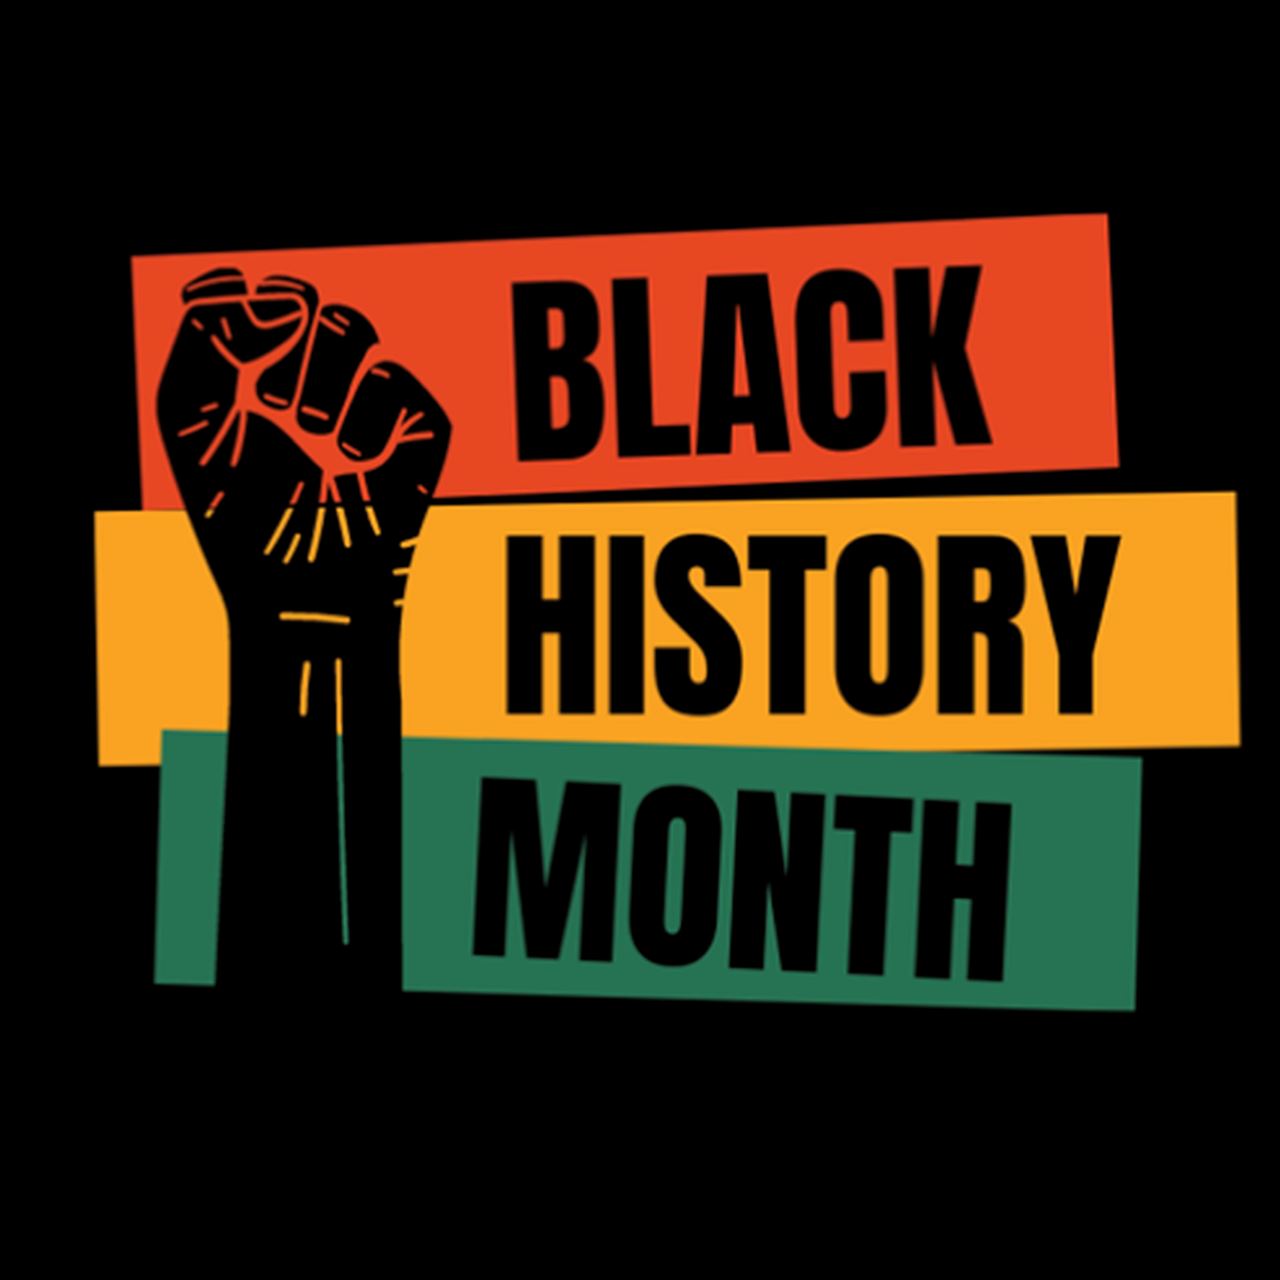 05 Best black history month door decoration ideas